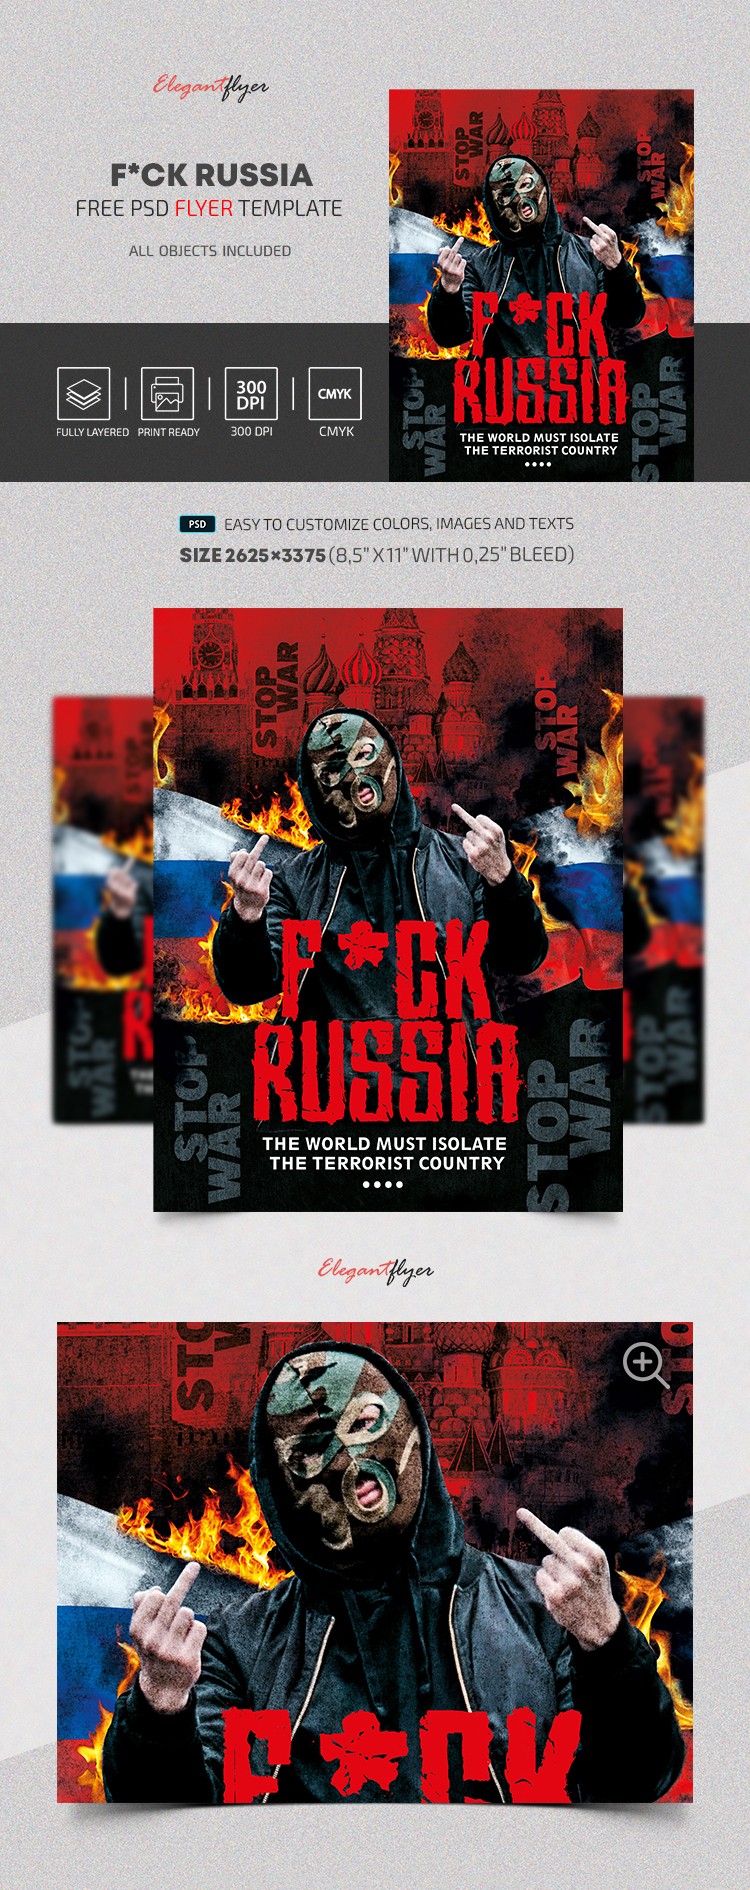 F*ck Russland Flyer by ElegantFlyer